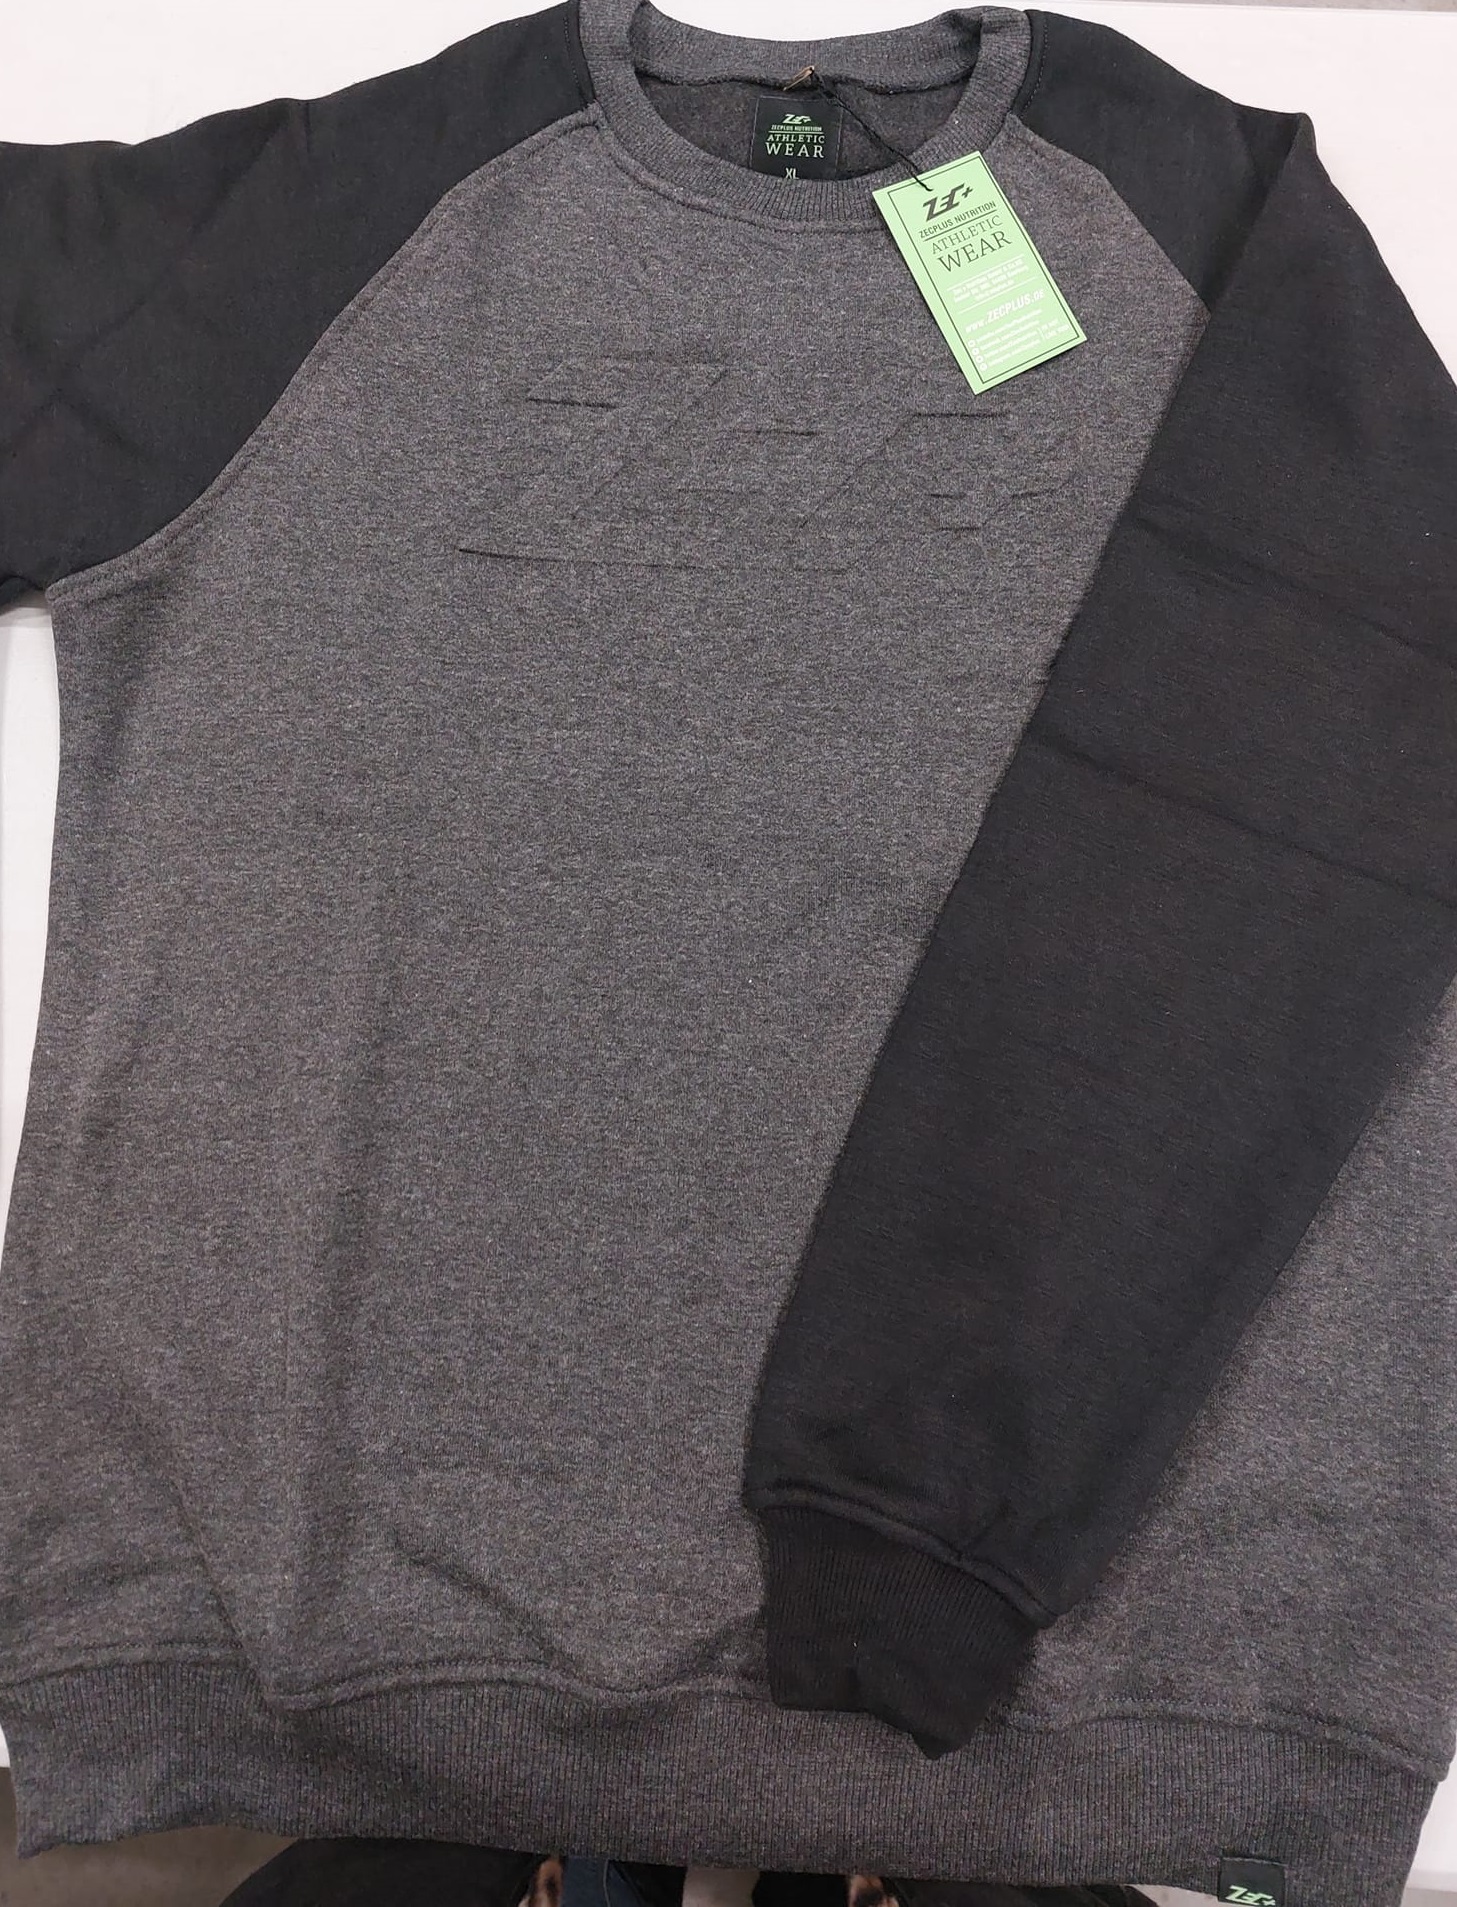 SweatShirt / Athletic Shirt for Men XL Dark Gray w/ Black Color